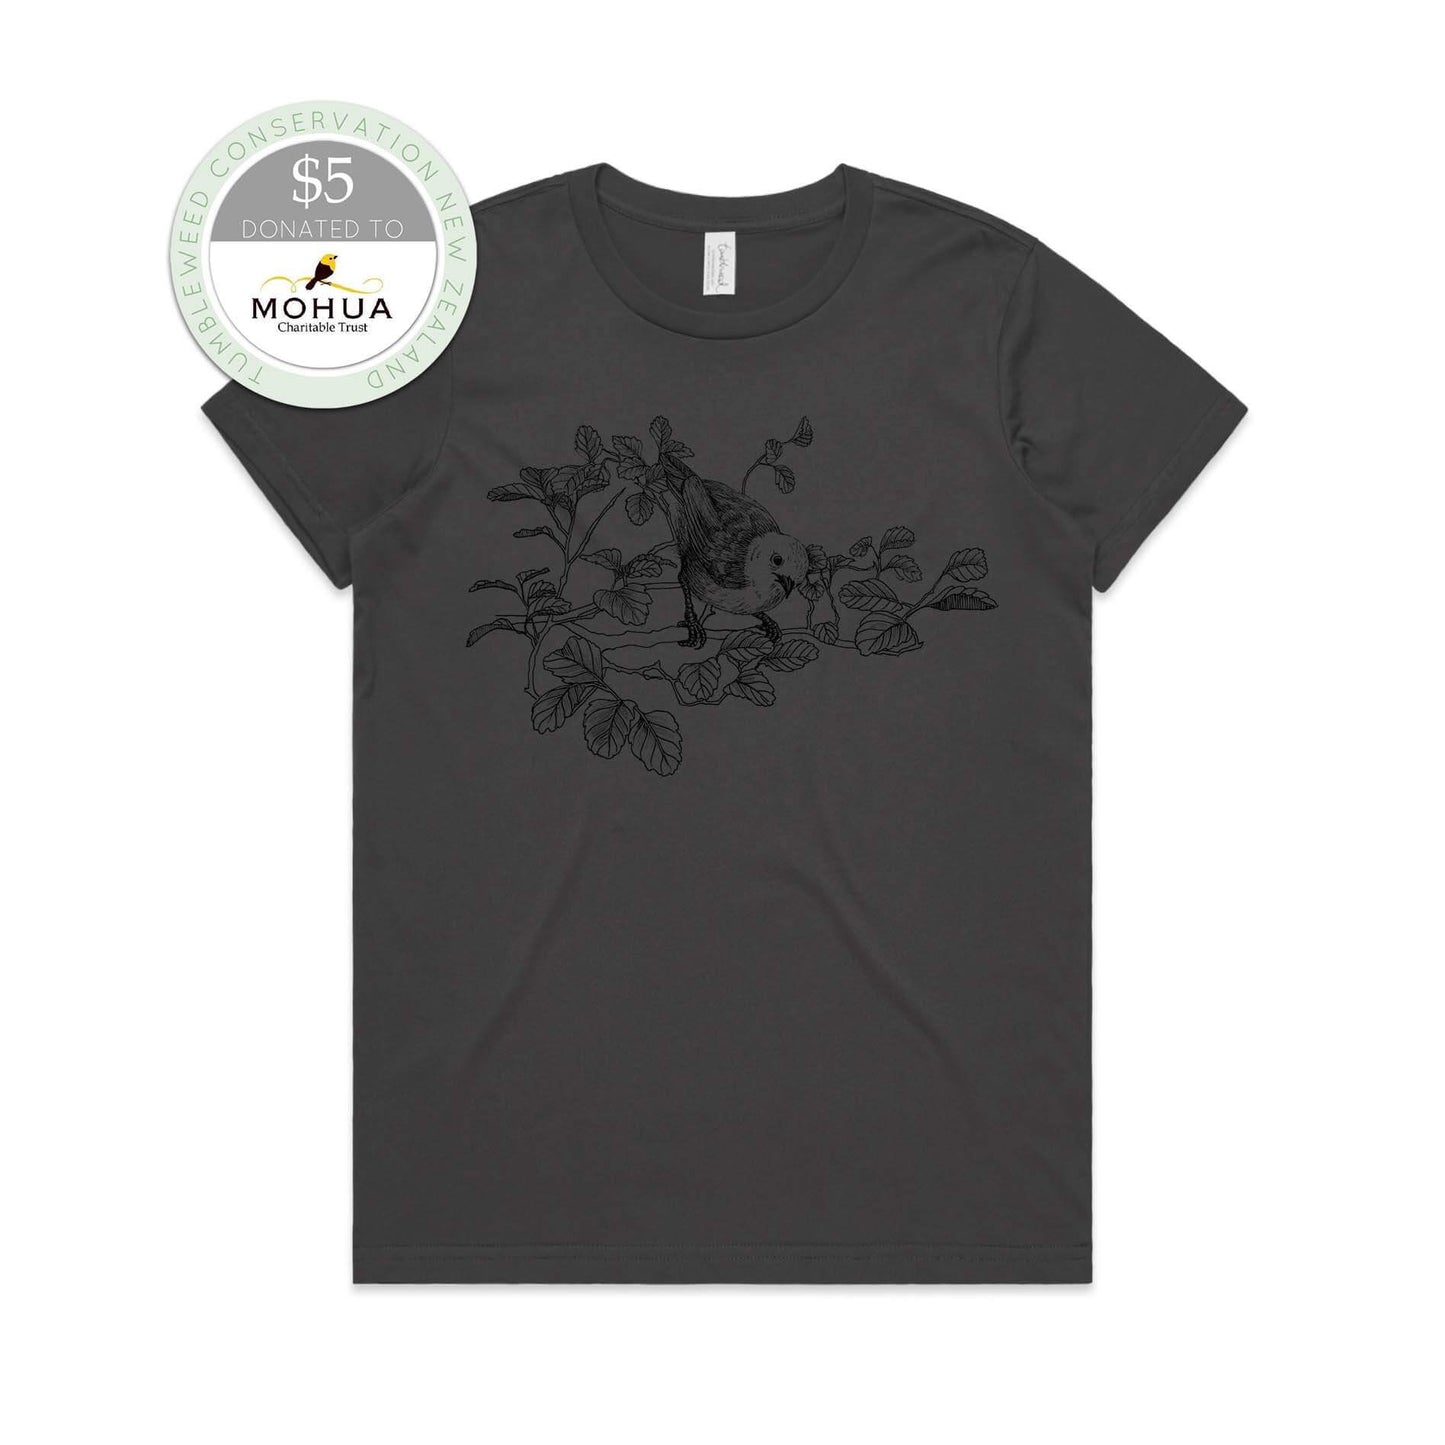 Charcoal, female t-shirt featuring a screen printed Mōhua/Yellowhead design.